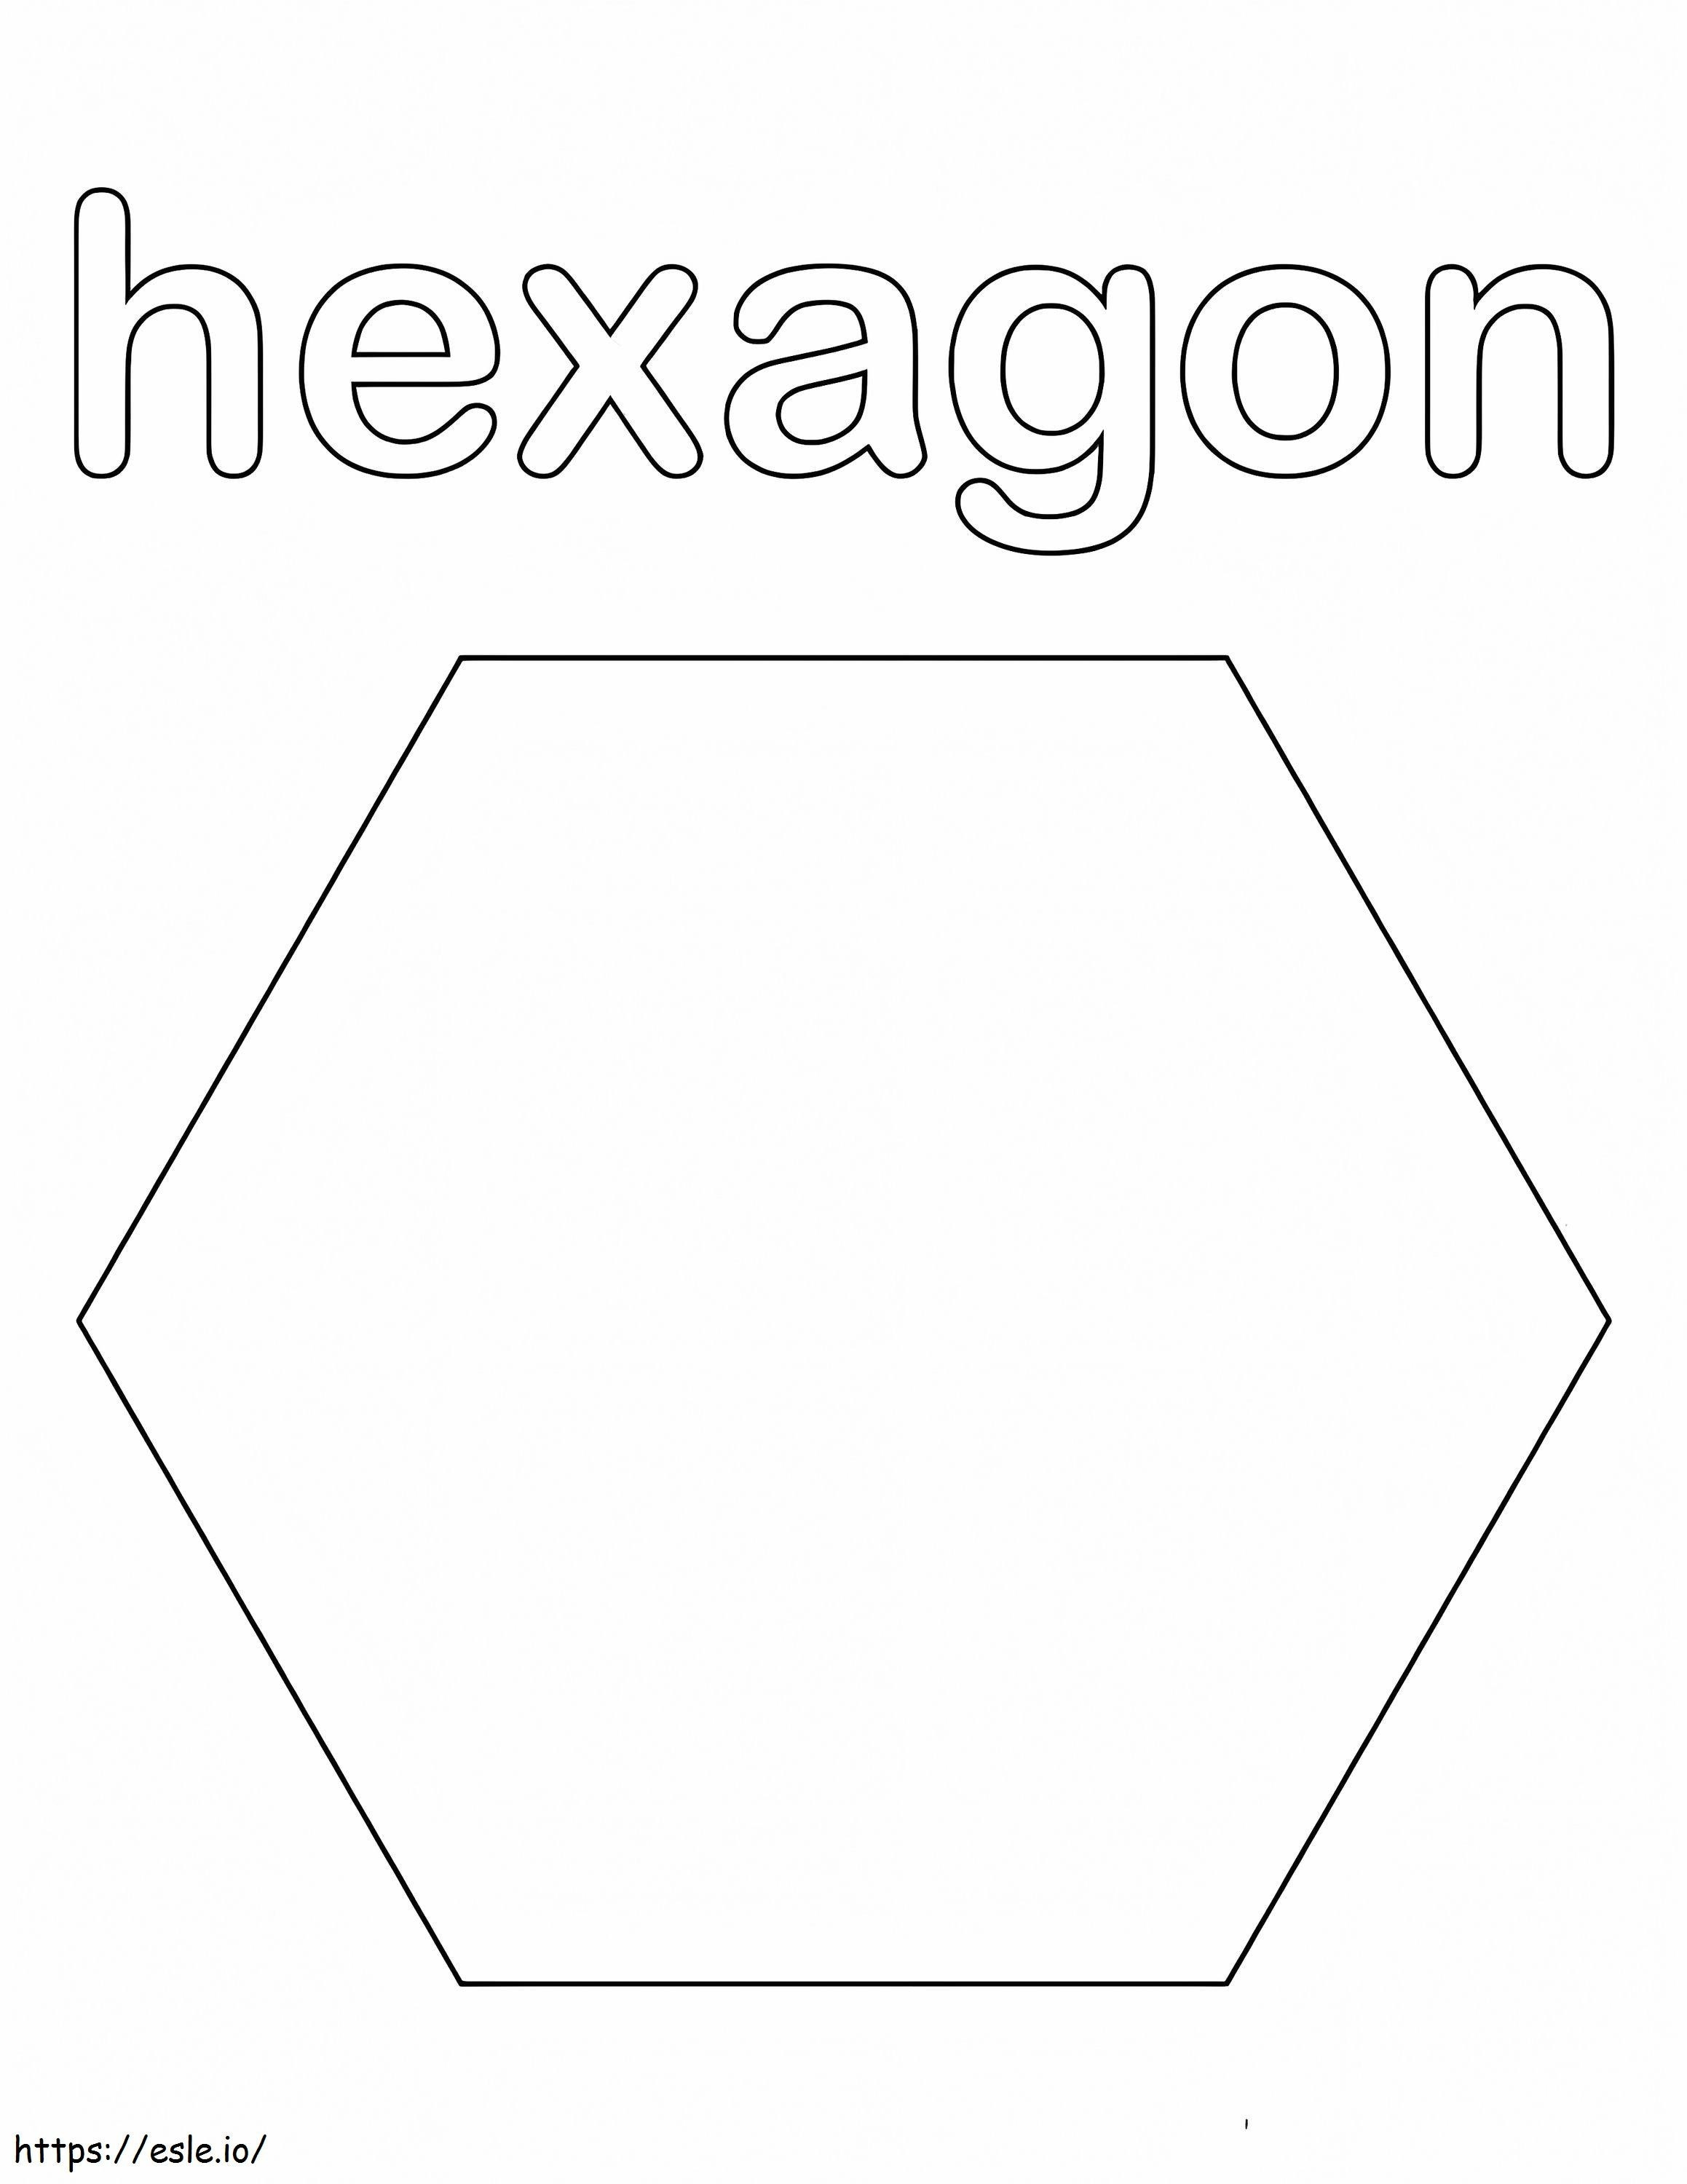 Hexagon ausmalbilder